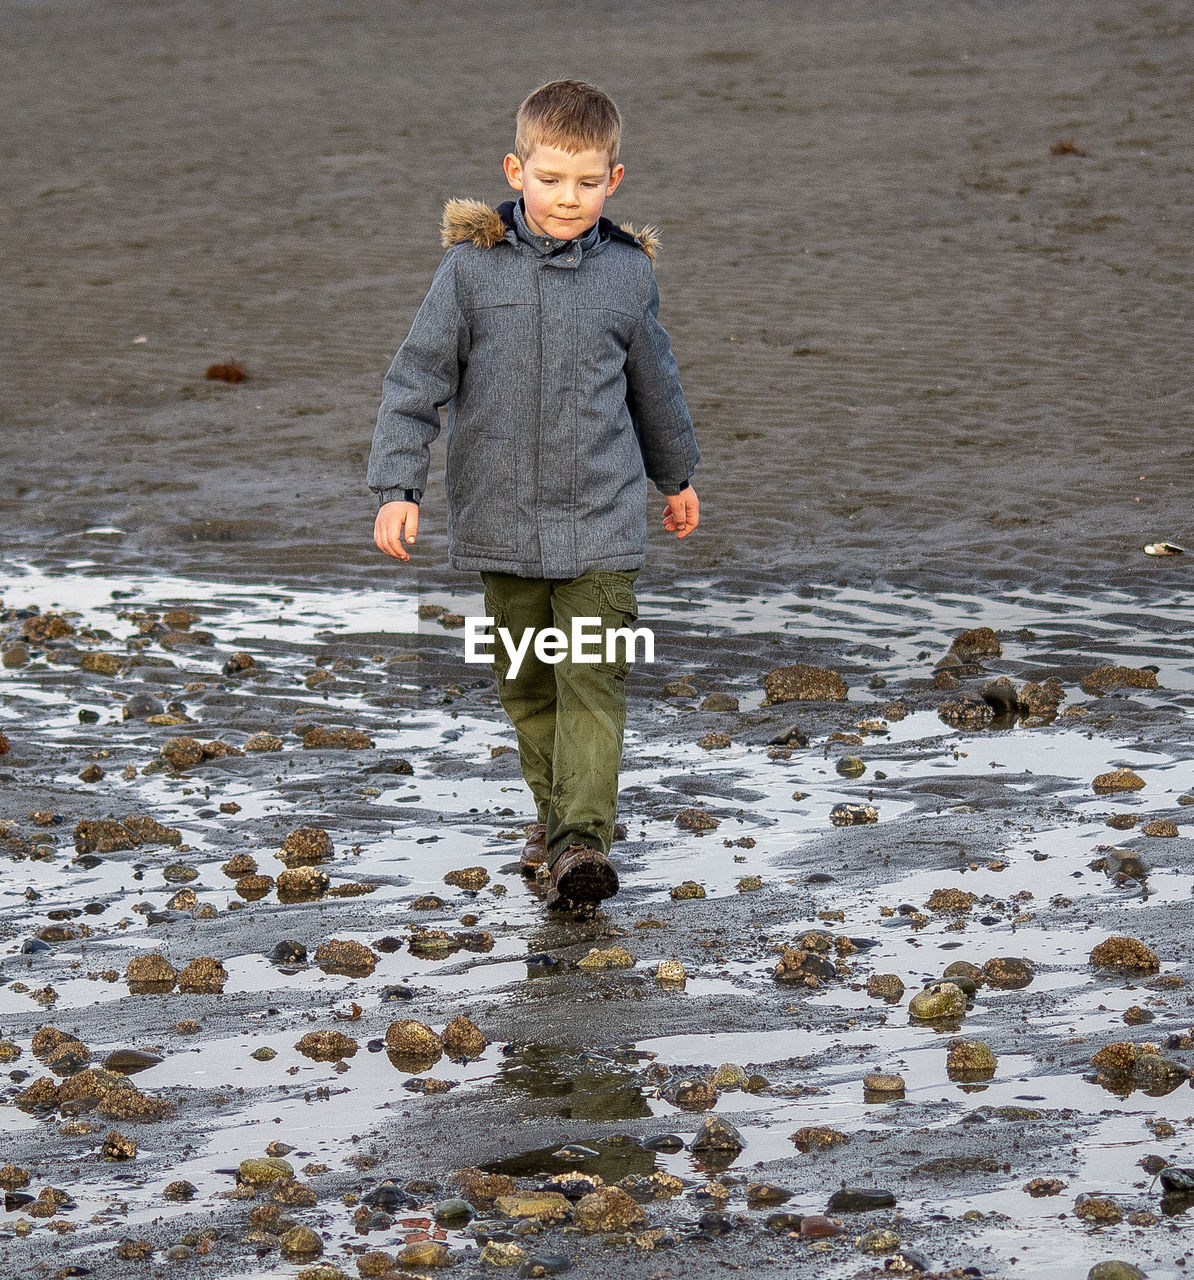 Boy walking at wet beach